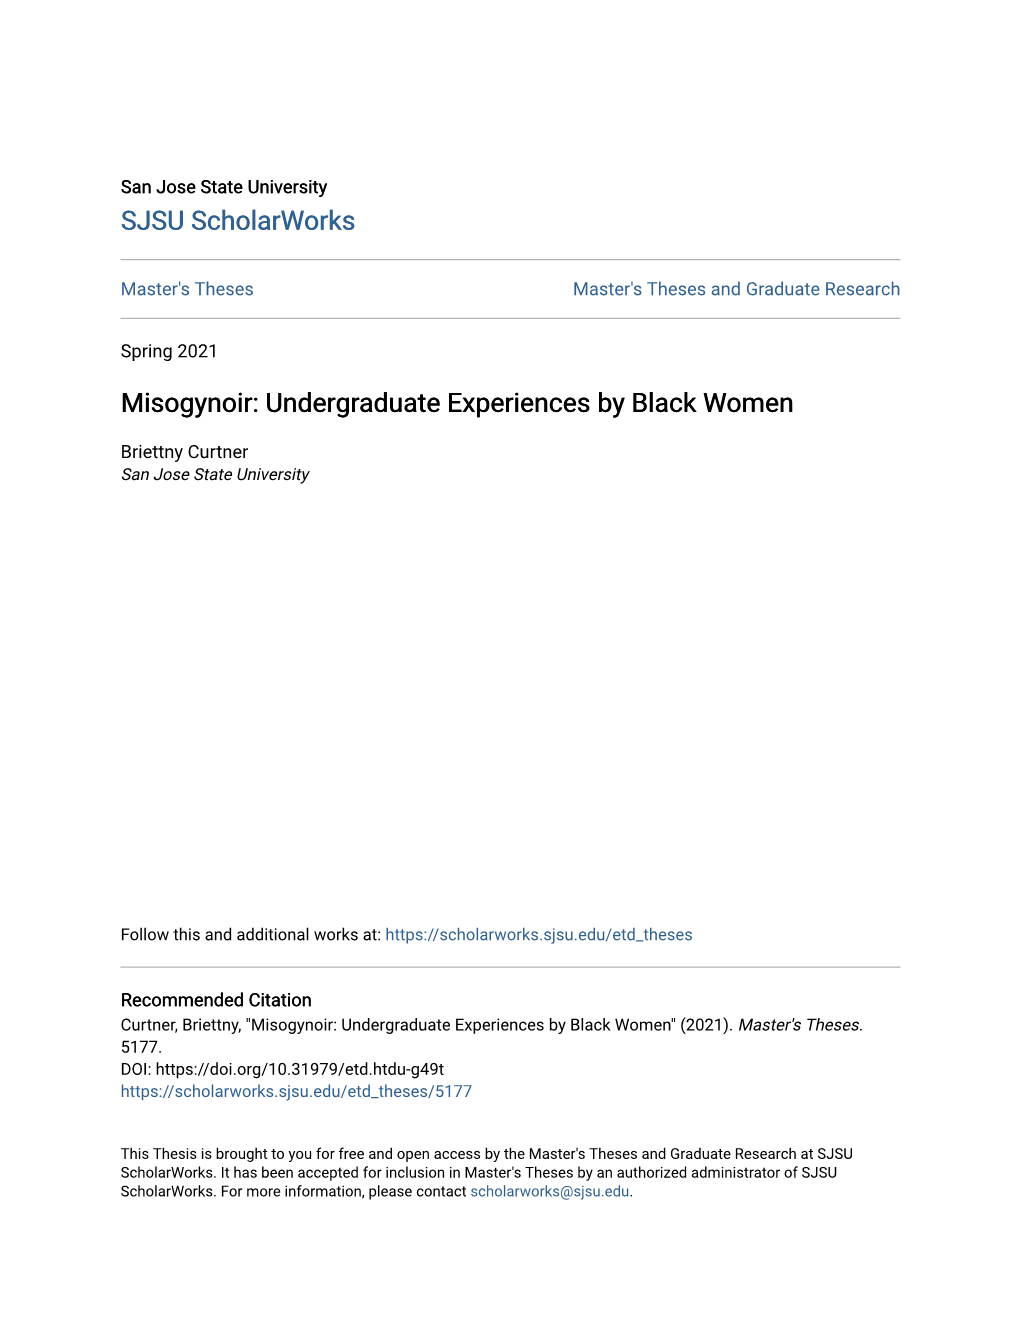 Misogynoir: Undergraduate Experiences by Black Women